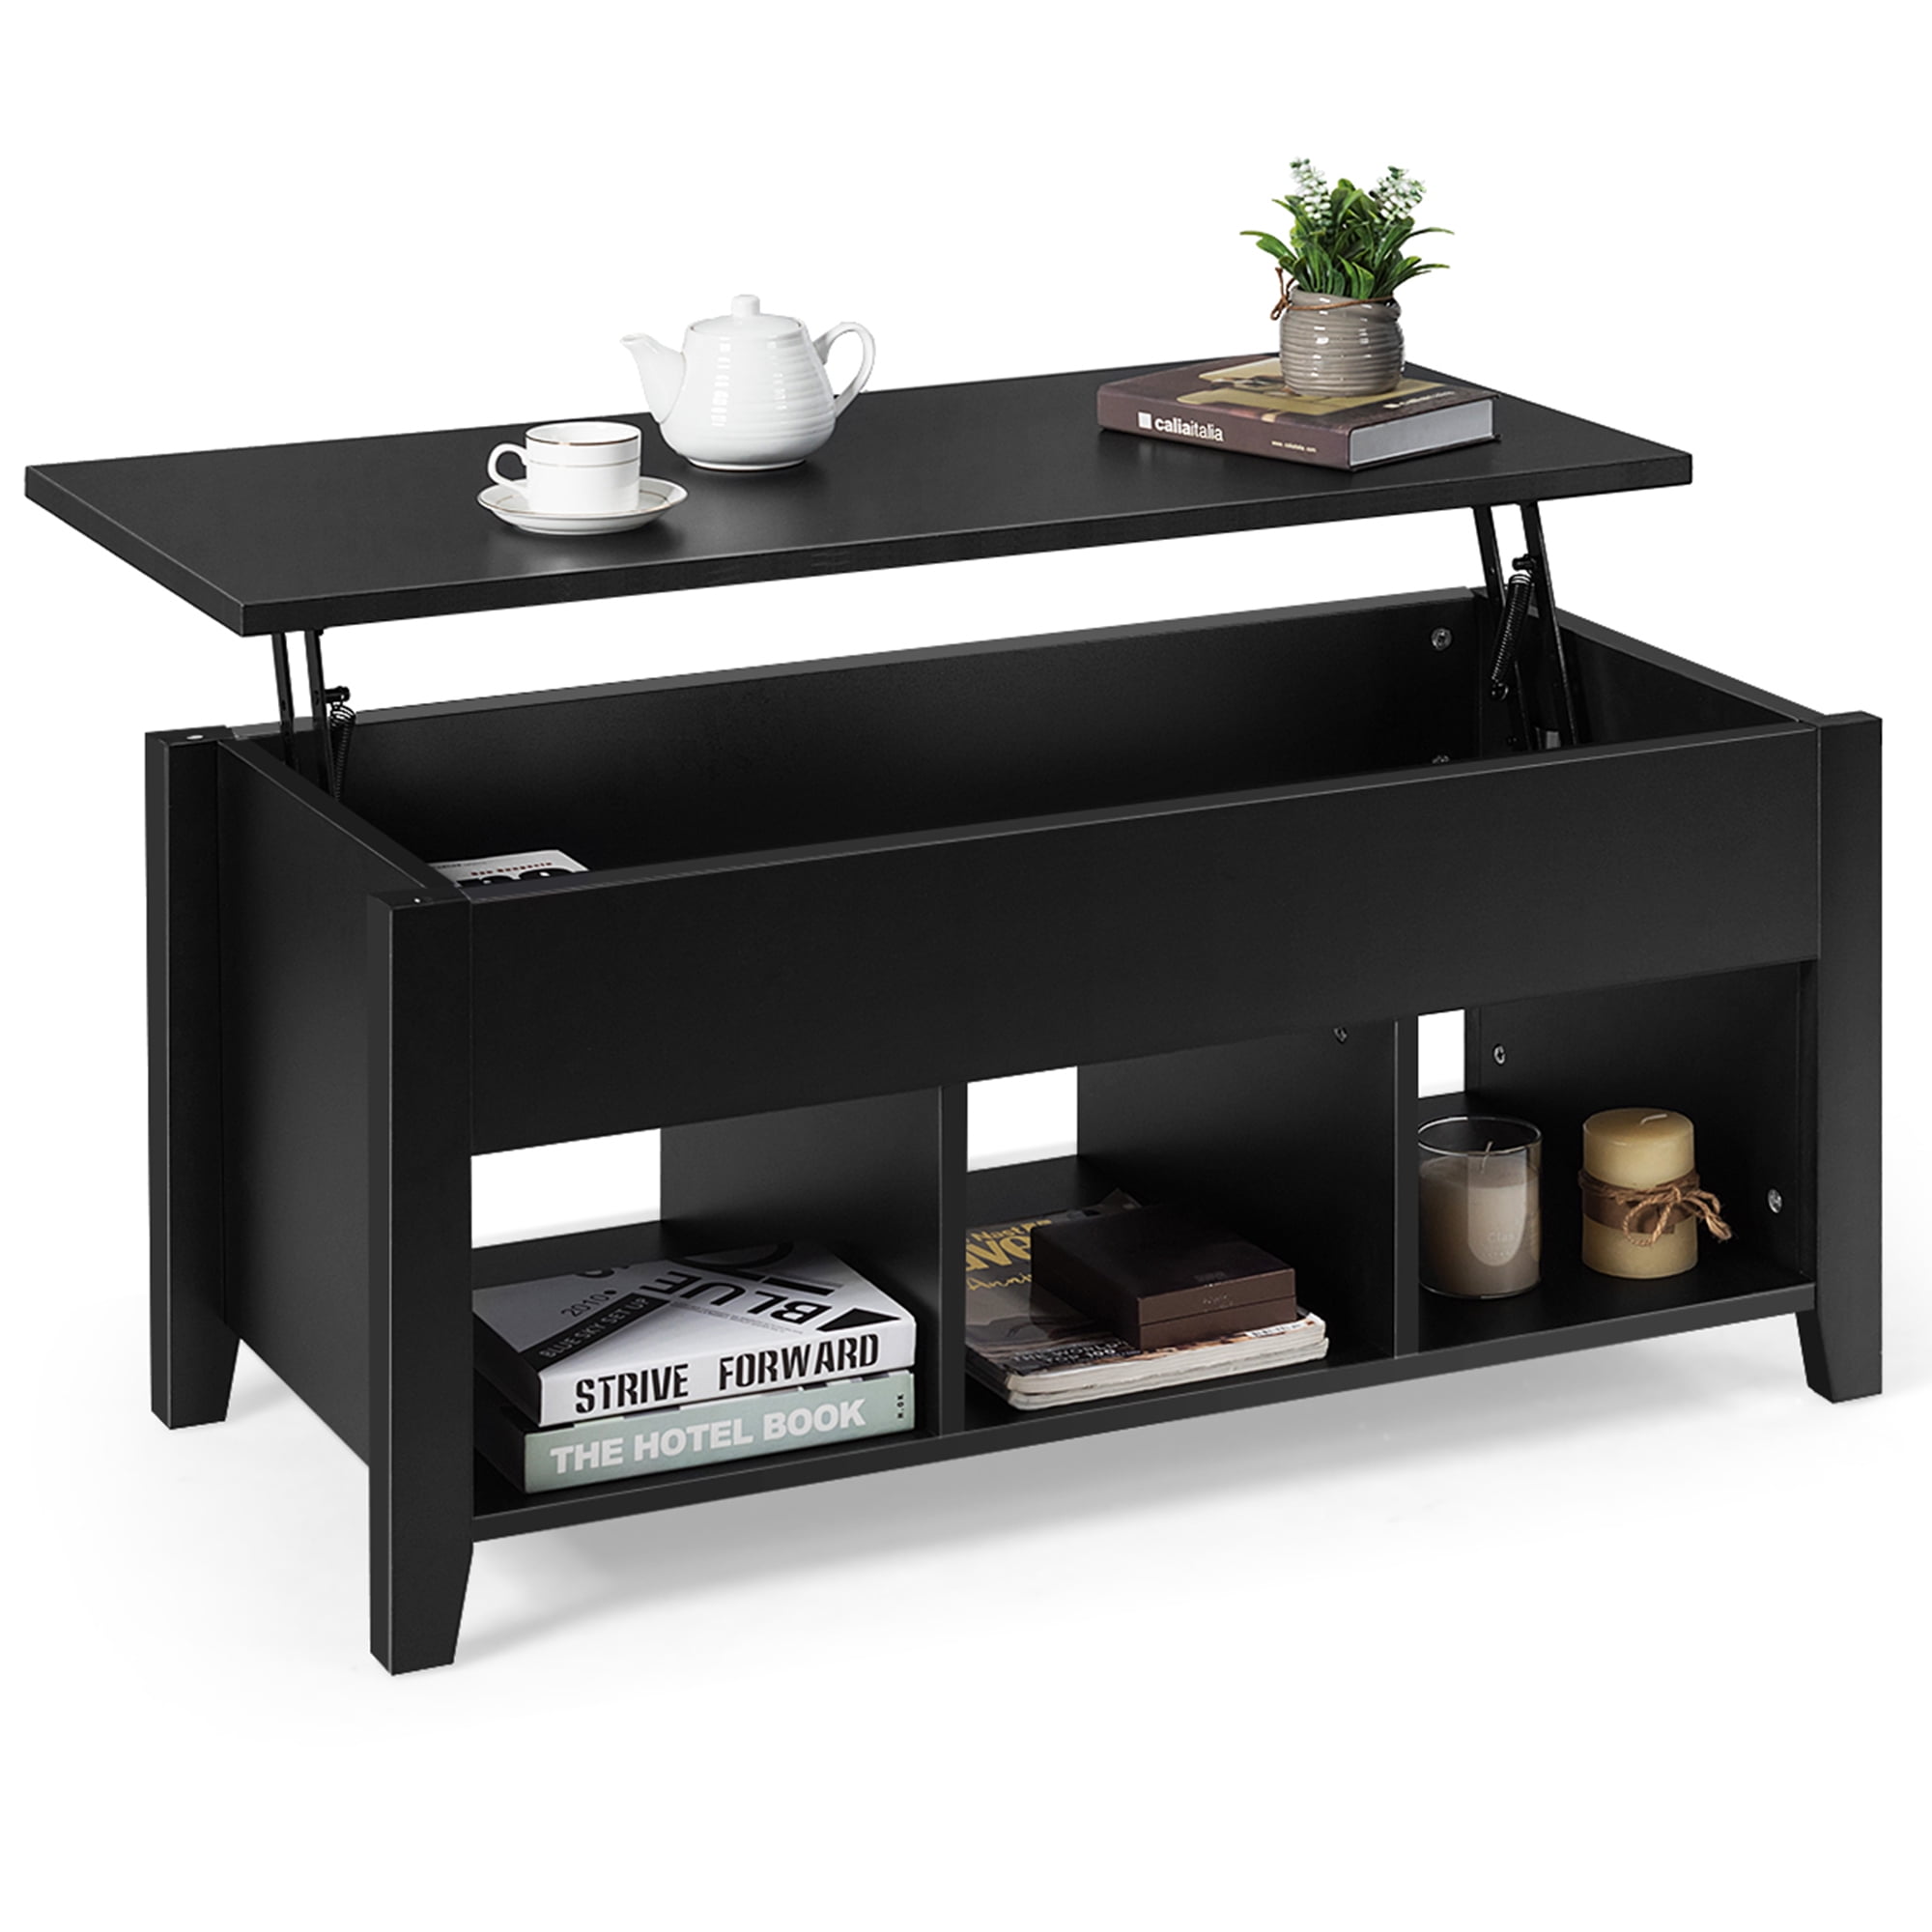 Gymax Lift Top Coffee Table W Storage Compartment Shelf Living Room Furniture Black Walmart Canada